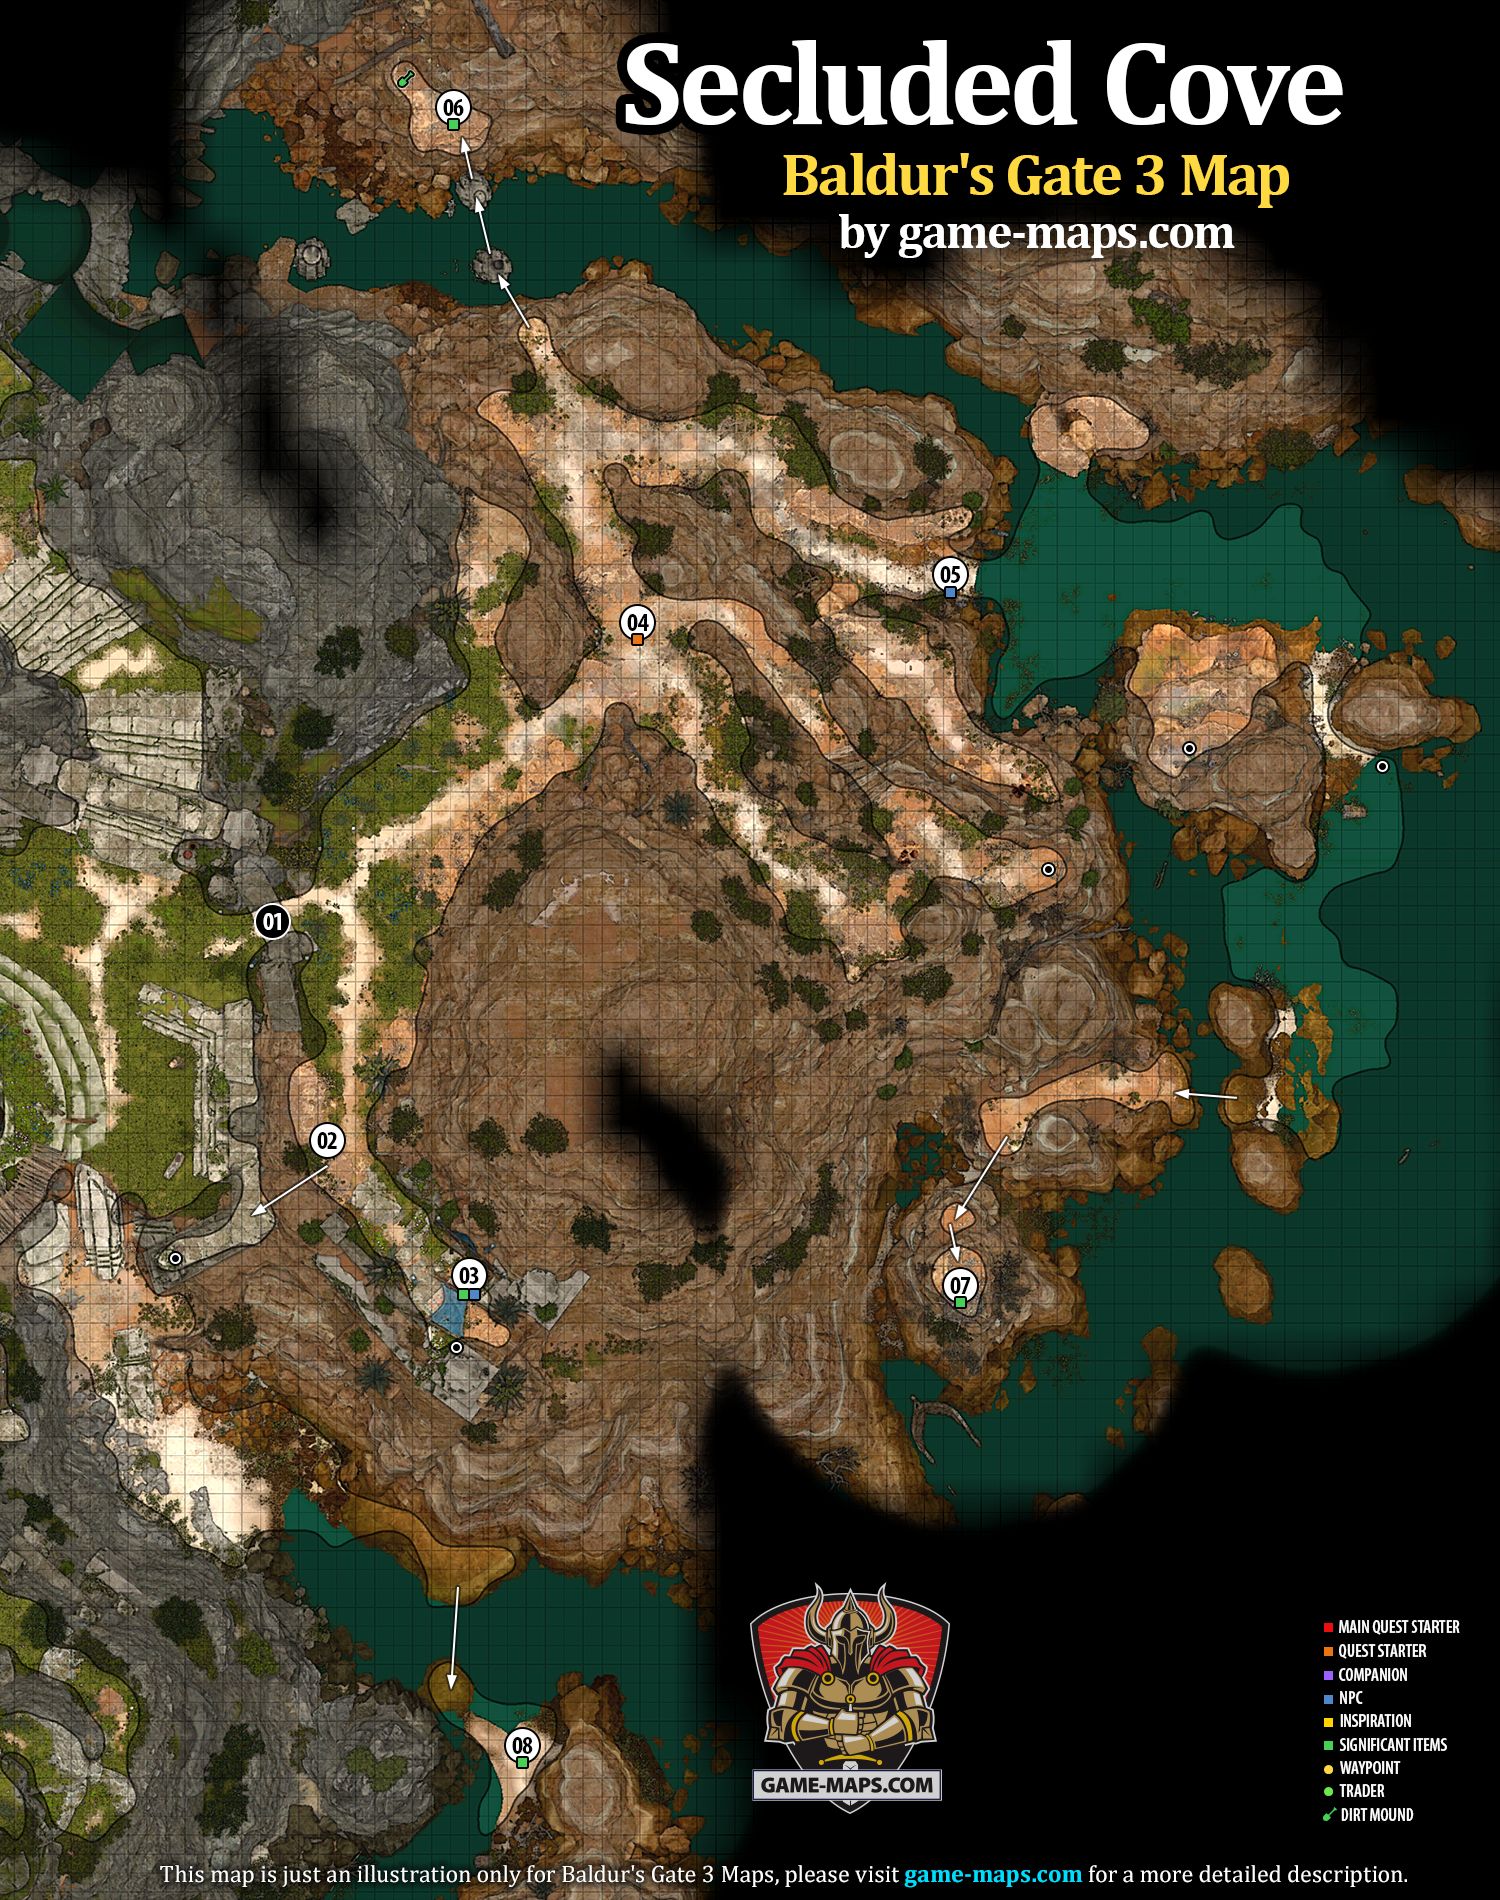 Secluded Cove Map Baldur's Gate 3